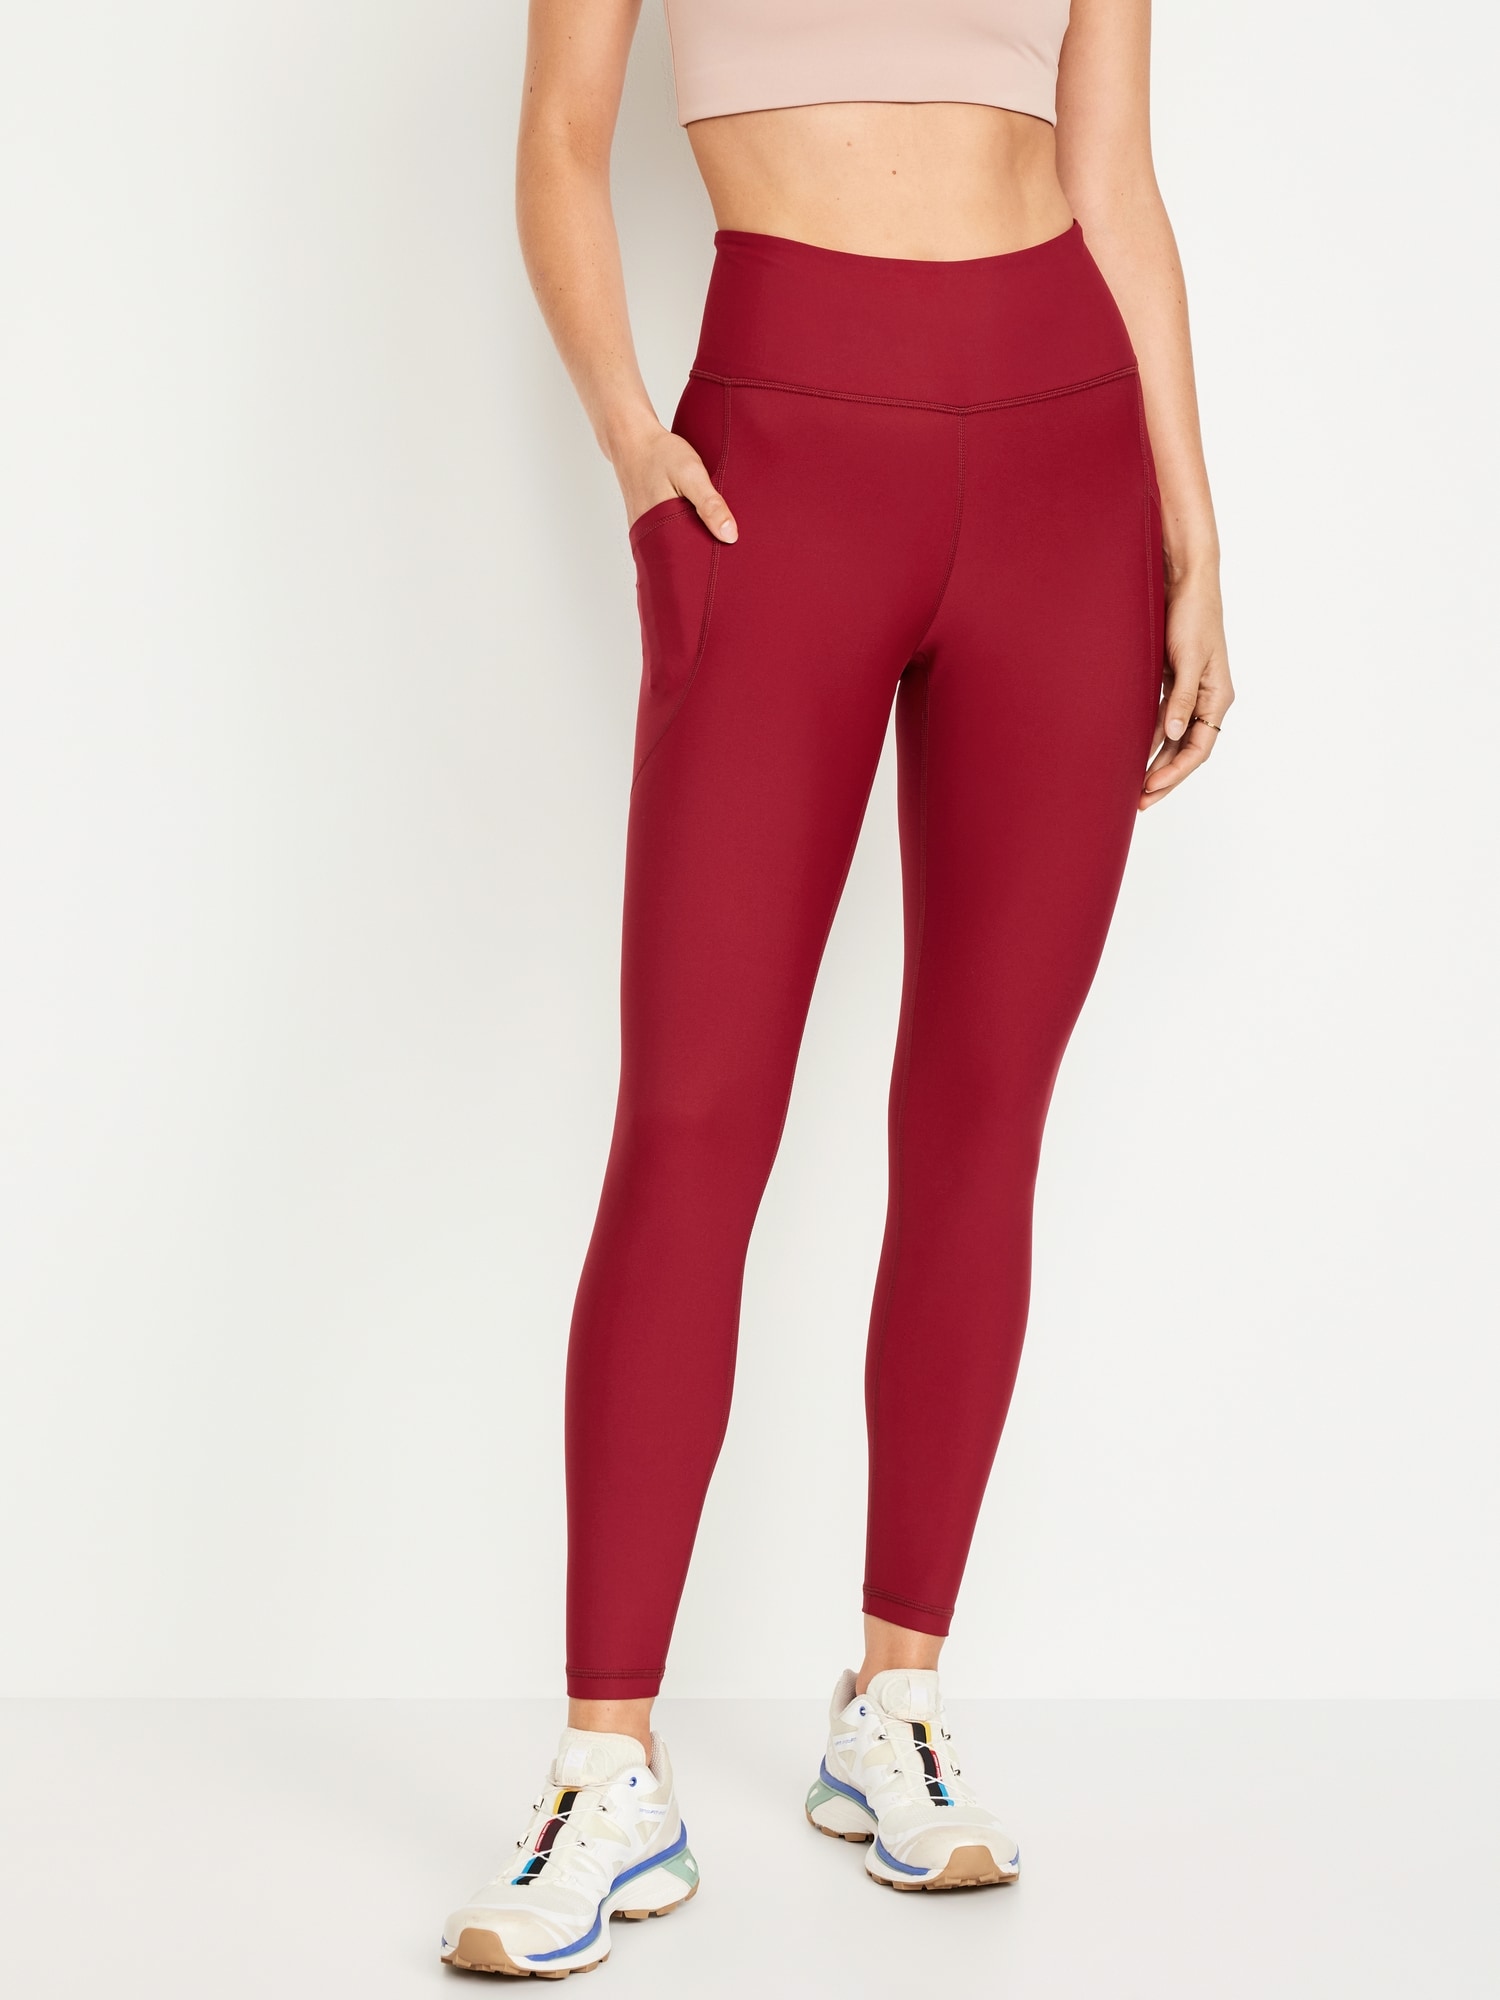 Aayomet Yoga Pants Women's Leggings High Waist Sports Fitness Pants Seamless  Yoga Pants Yoga Pants Petite Length (Red, L) 